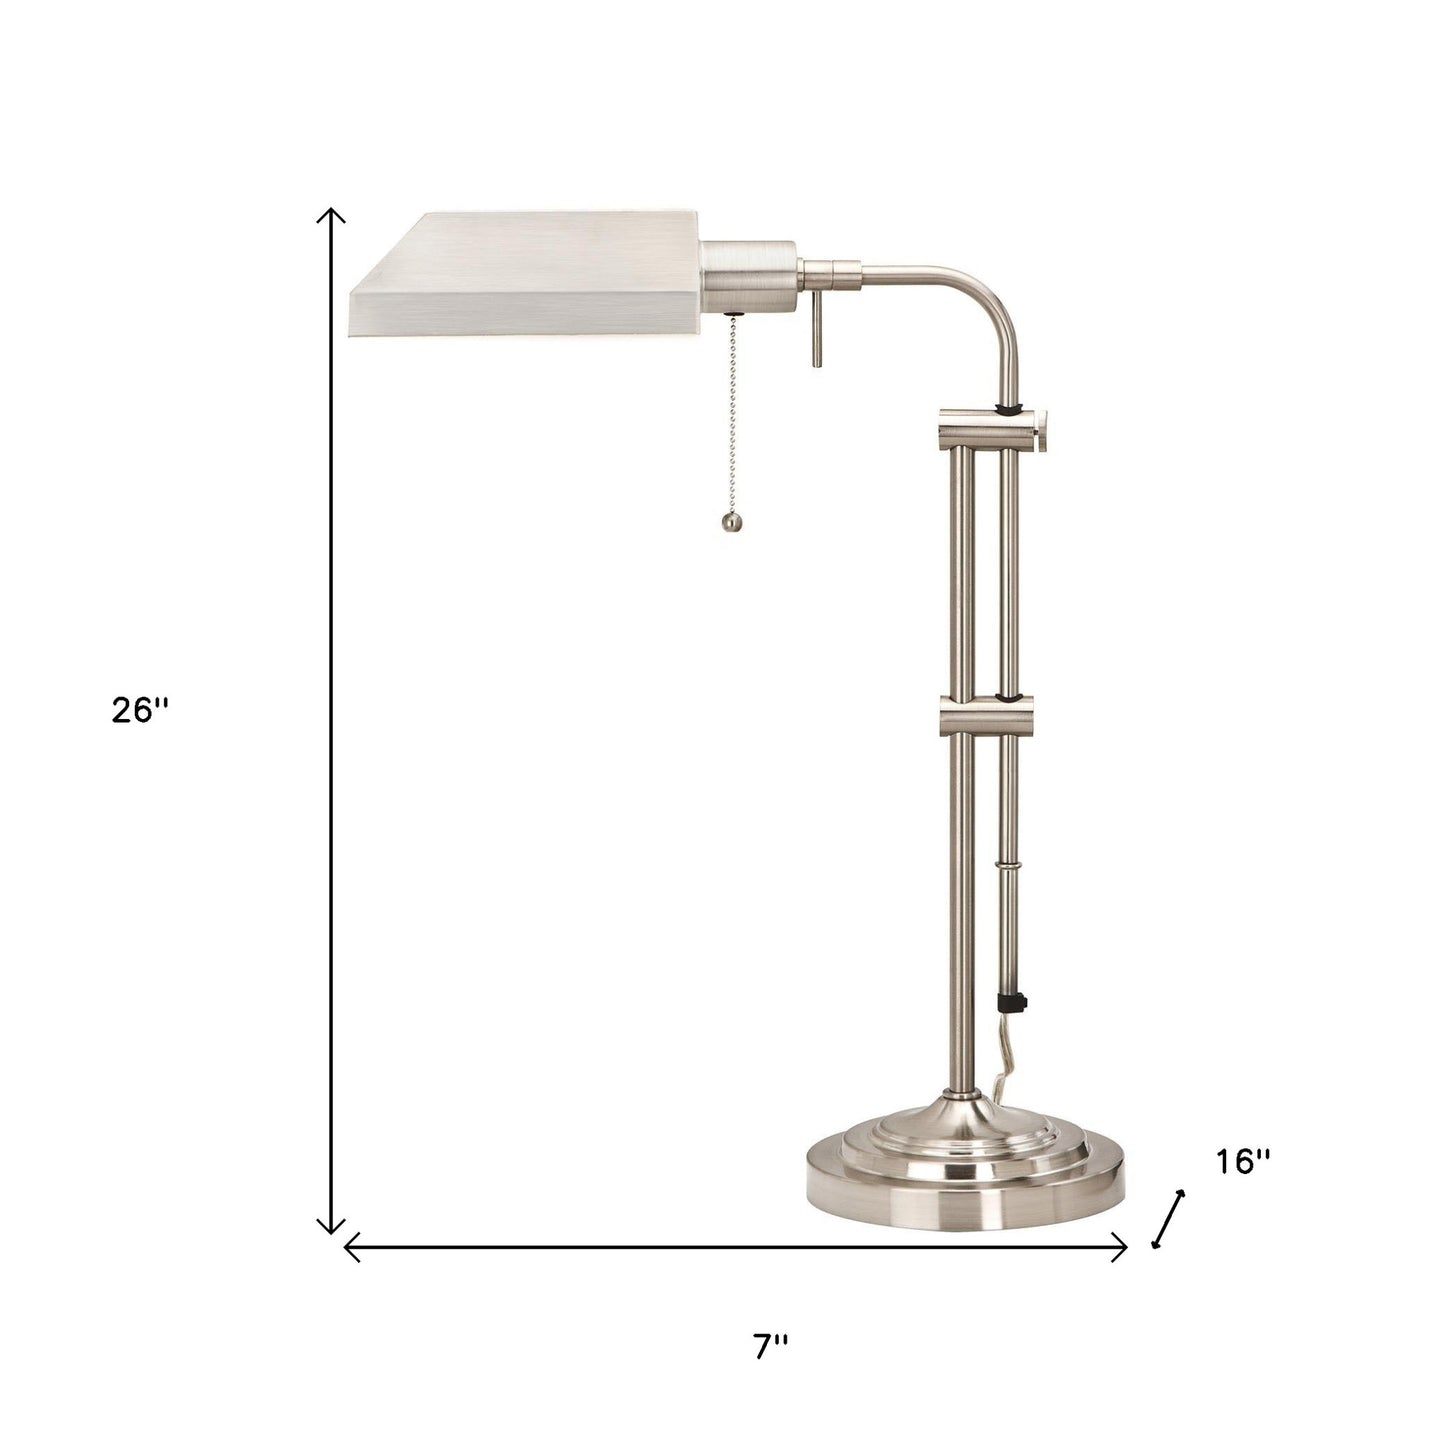 26" Nickel Metal Adjustable Table Lamp With Nickel Rectangular Shade